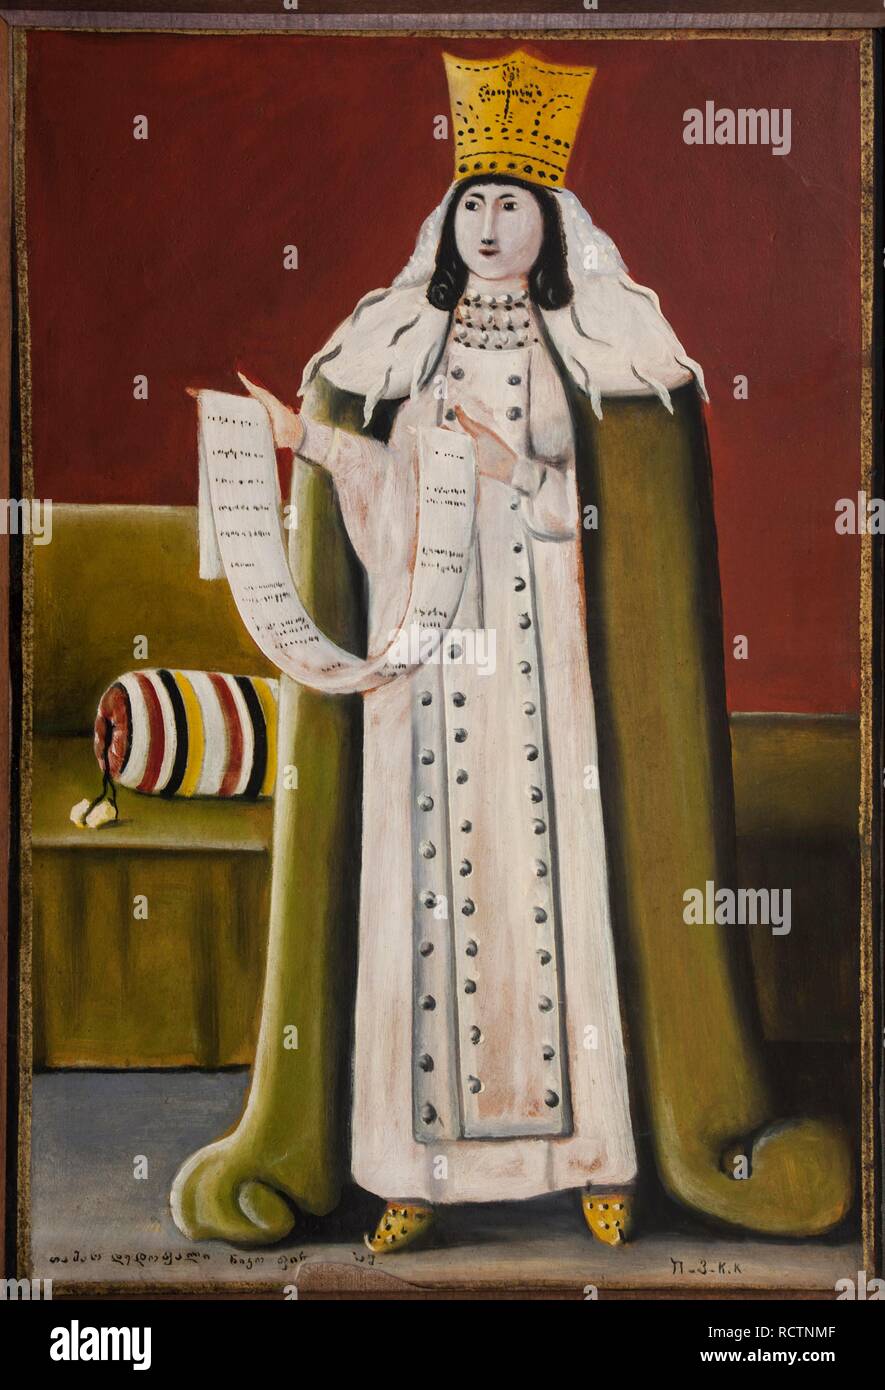 La Reine Tamar. Niko Pirosmanashvili musée : Musée, Mirzaani. Auteur : NIKO PIROSMANI. Banque D'Images